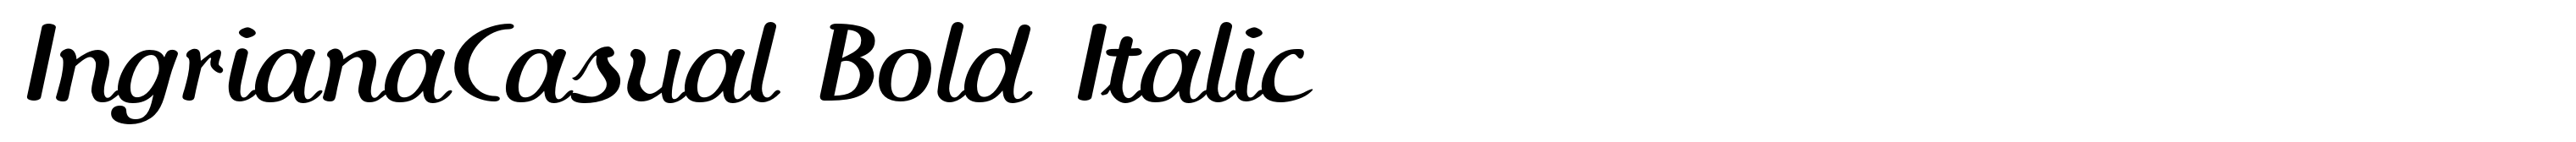 IngrianaCasual Bold Italic